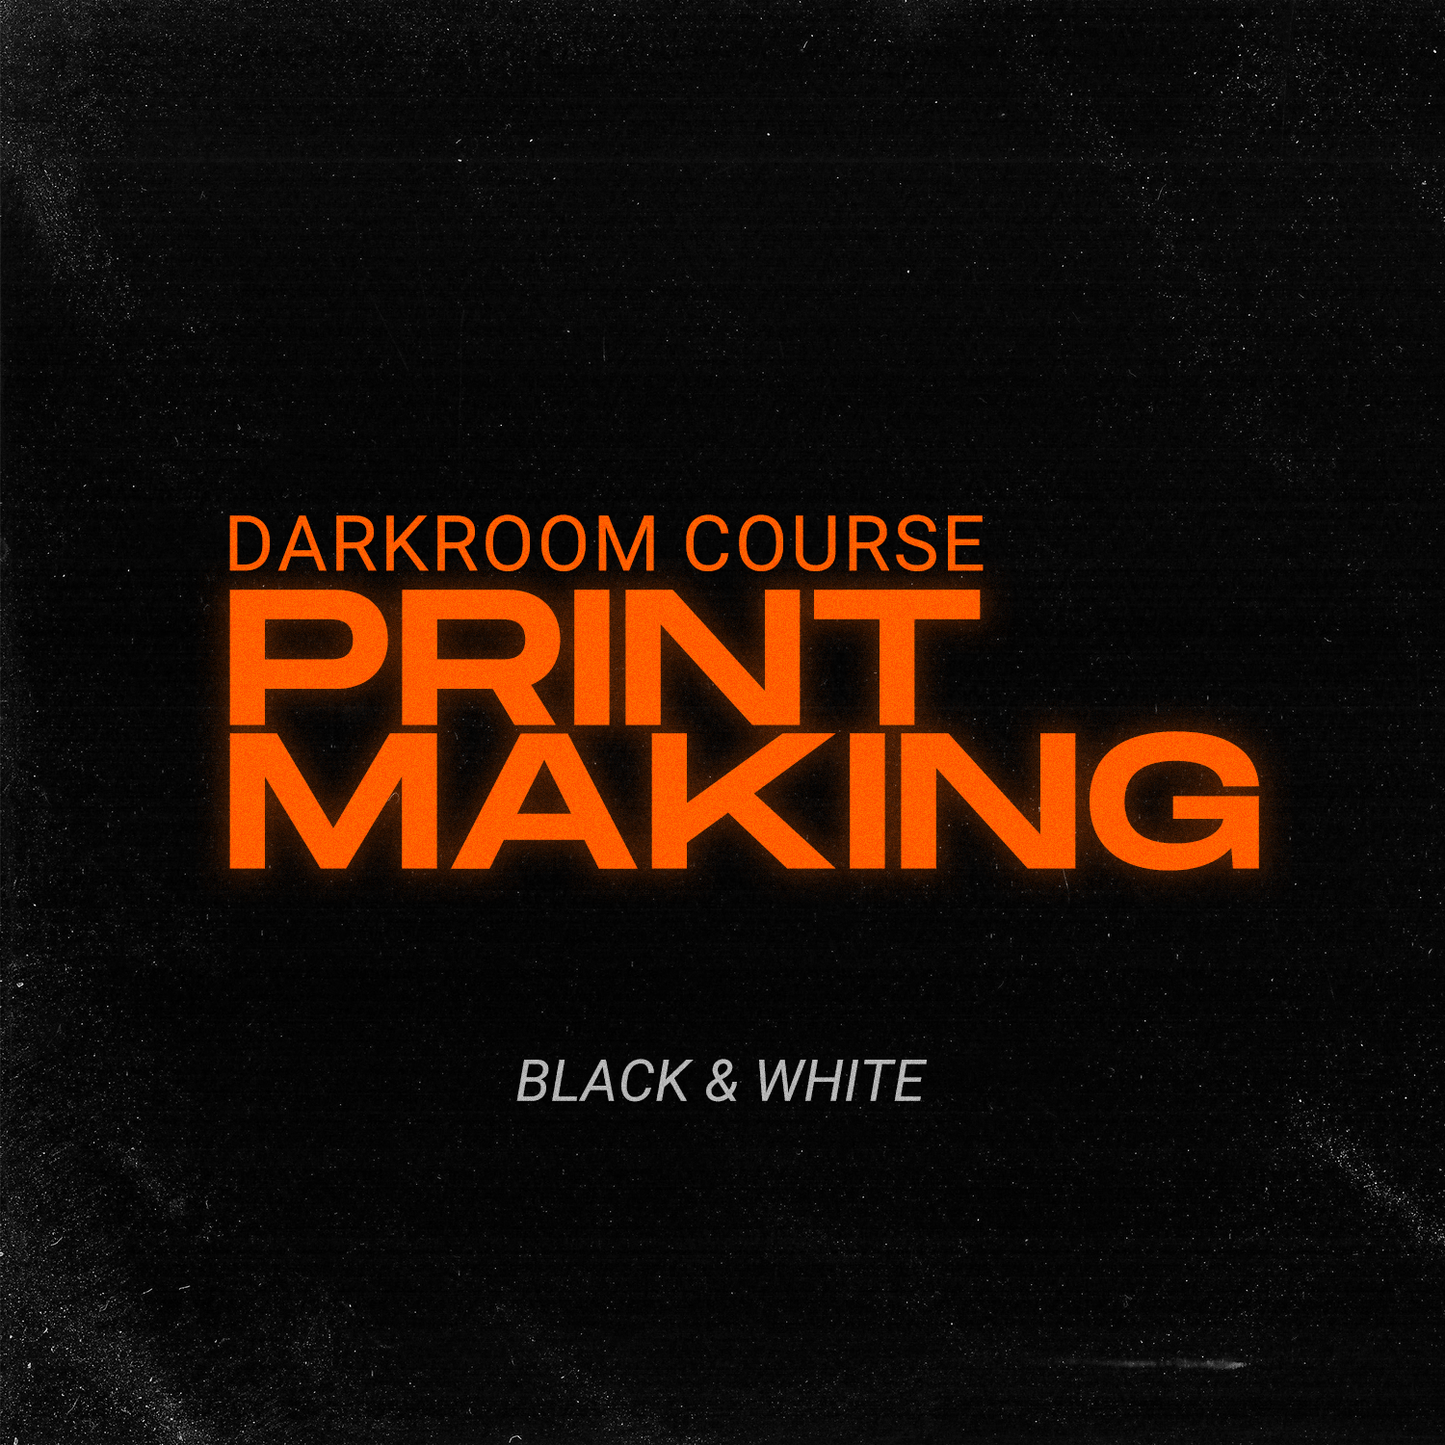 Black & White Darkroom Print Making